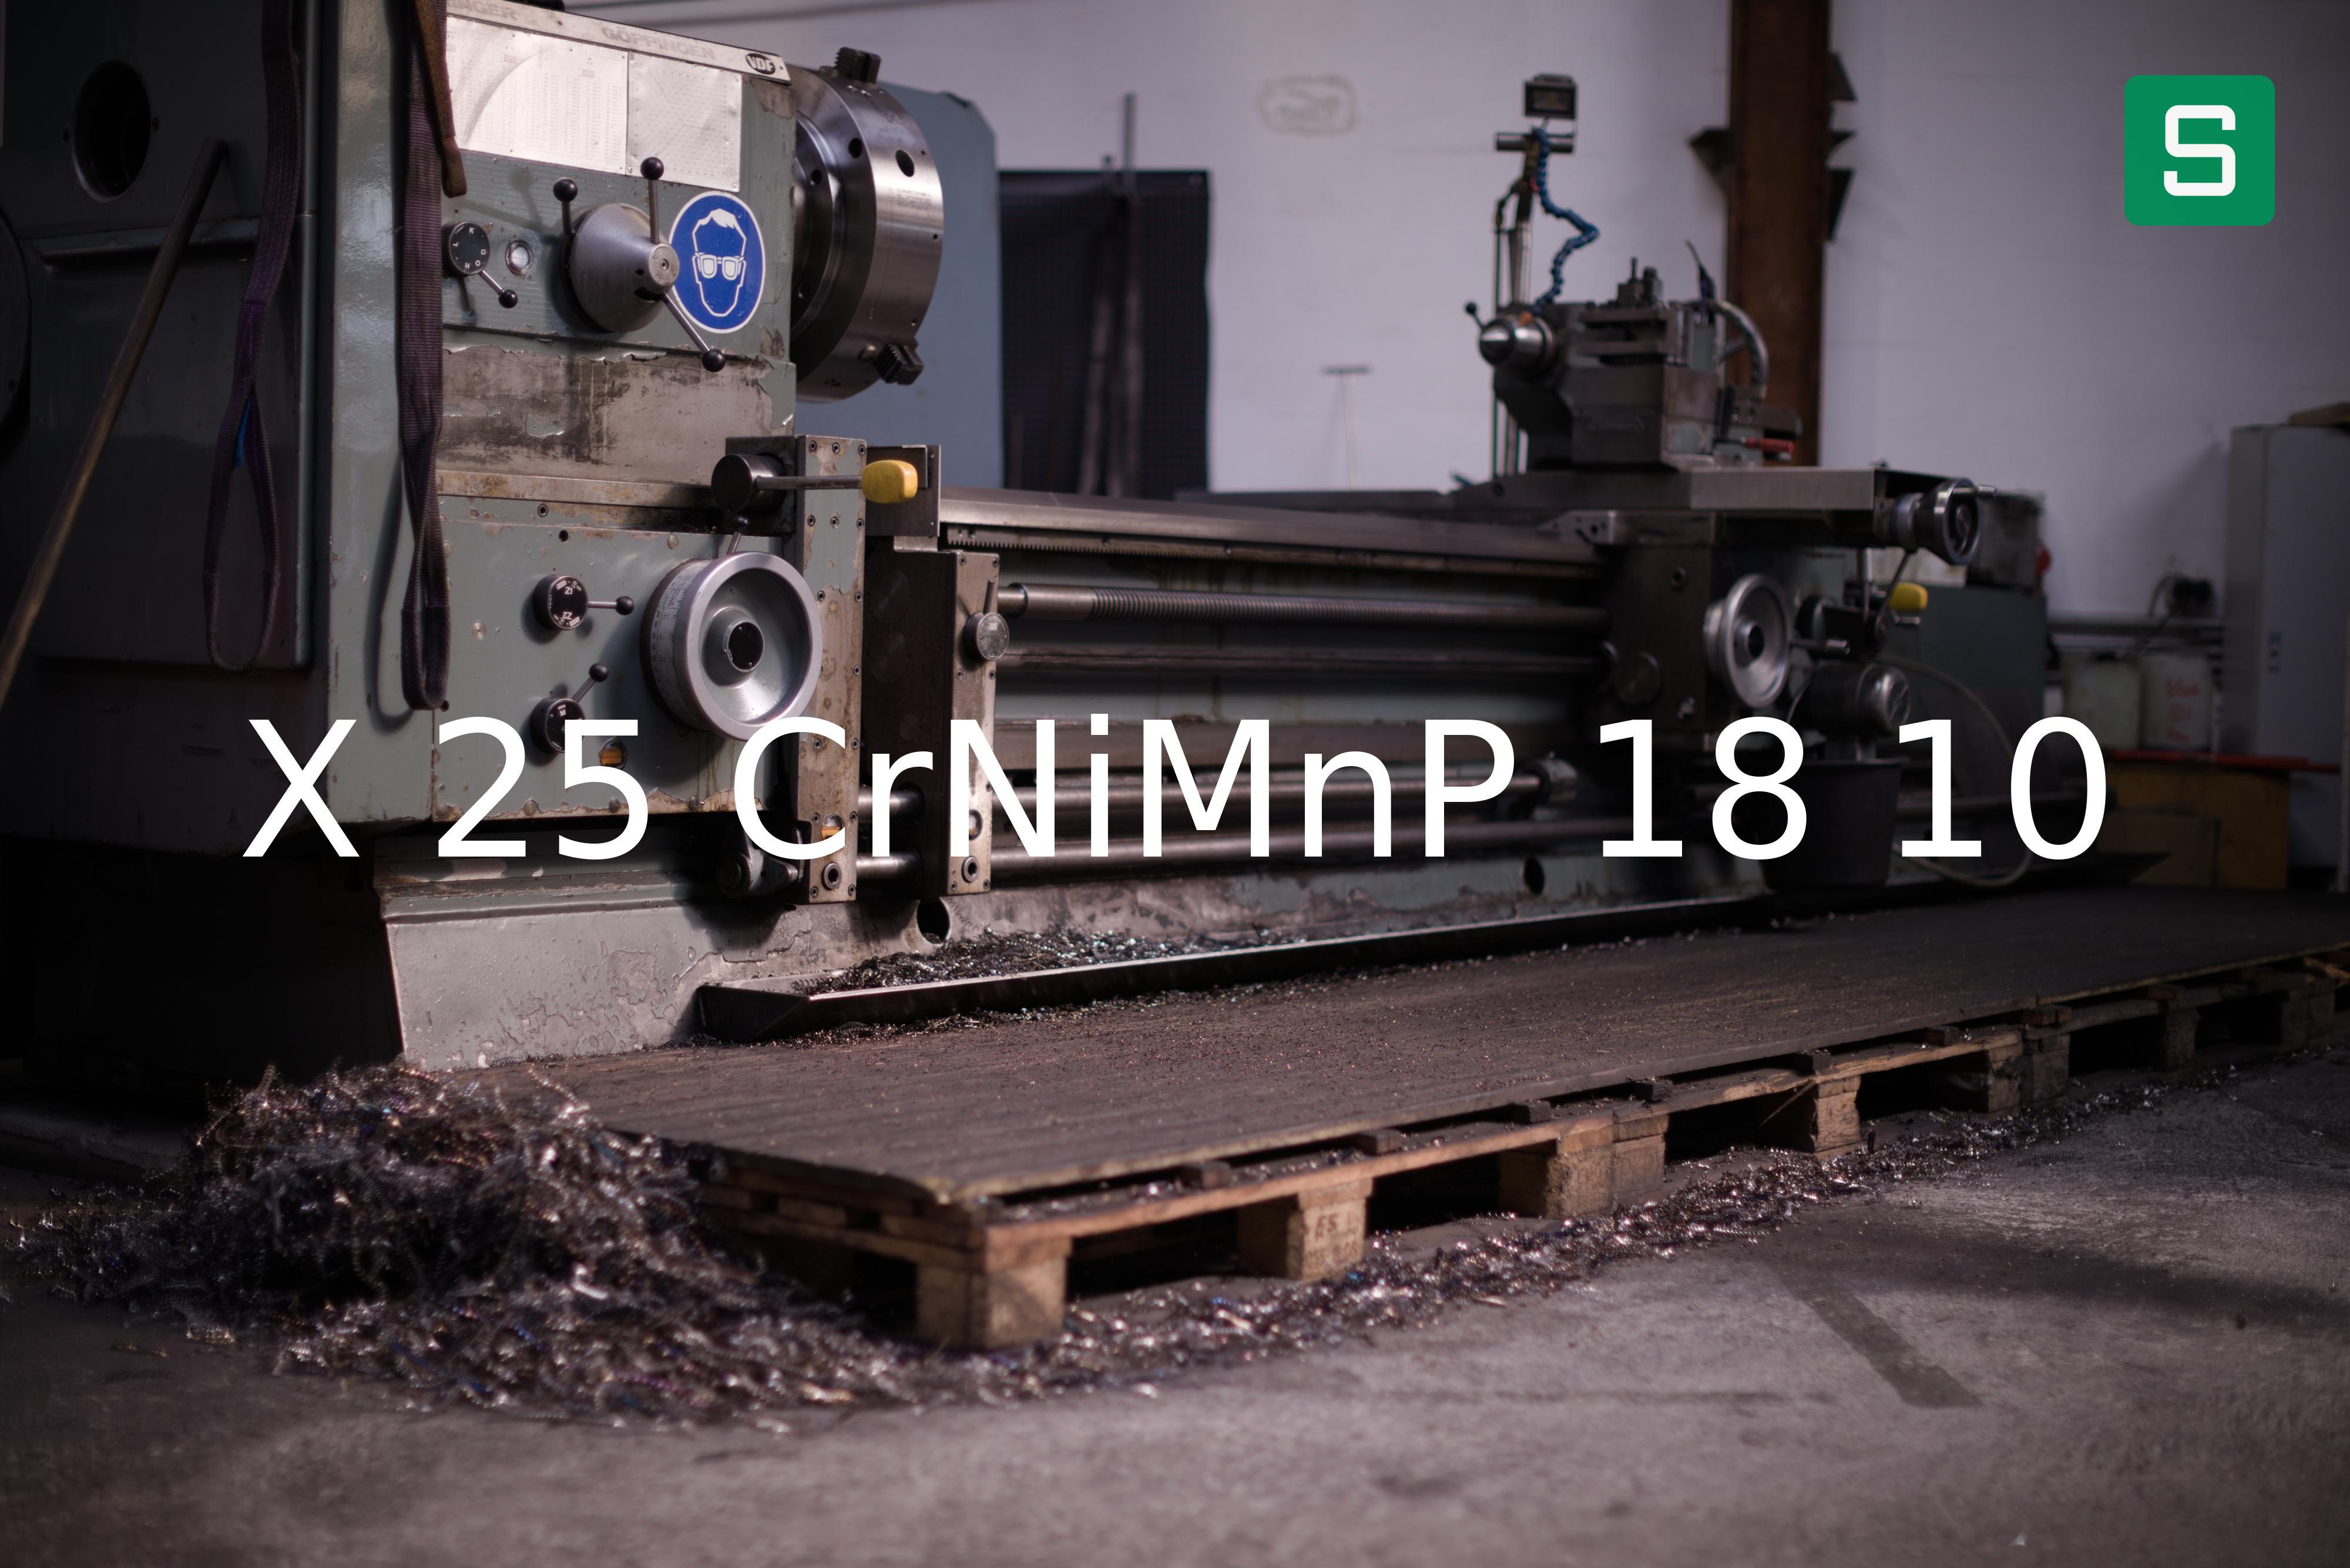 Steel Material: X 25 CrNiMnP 18 10